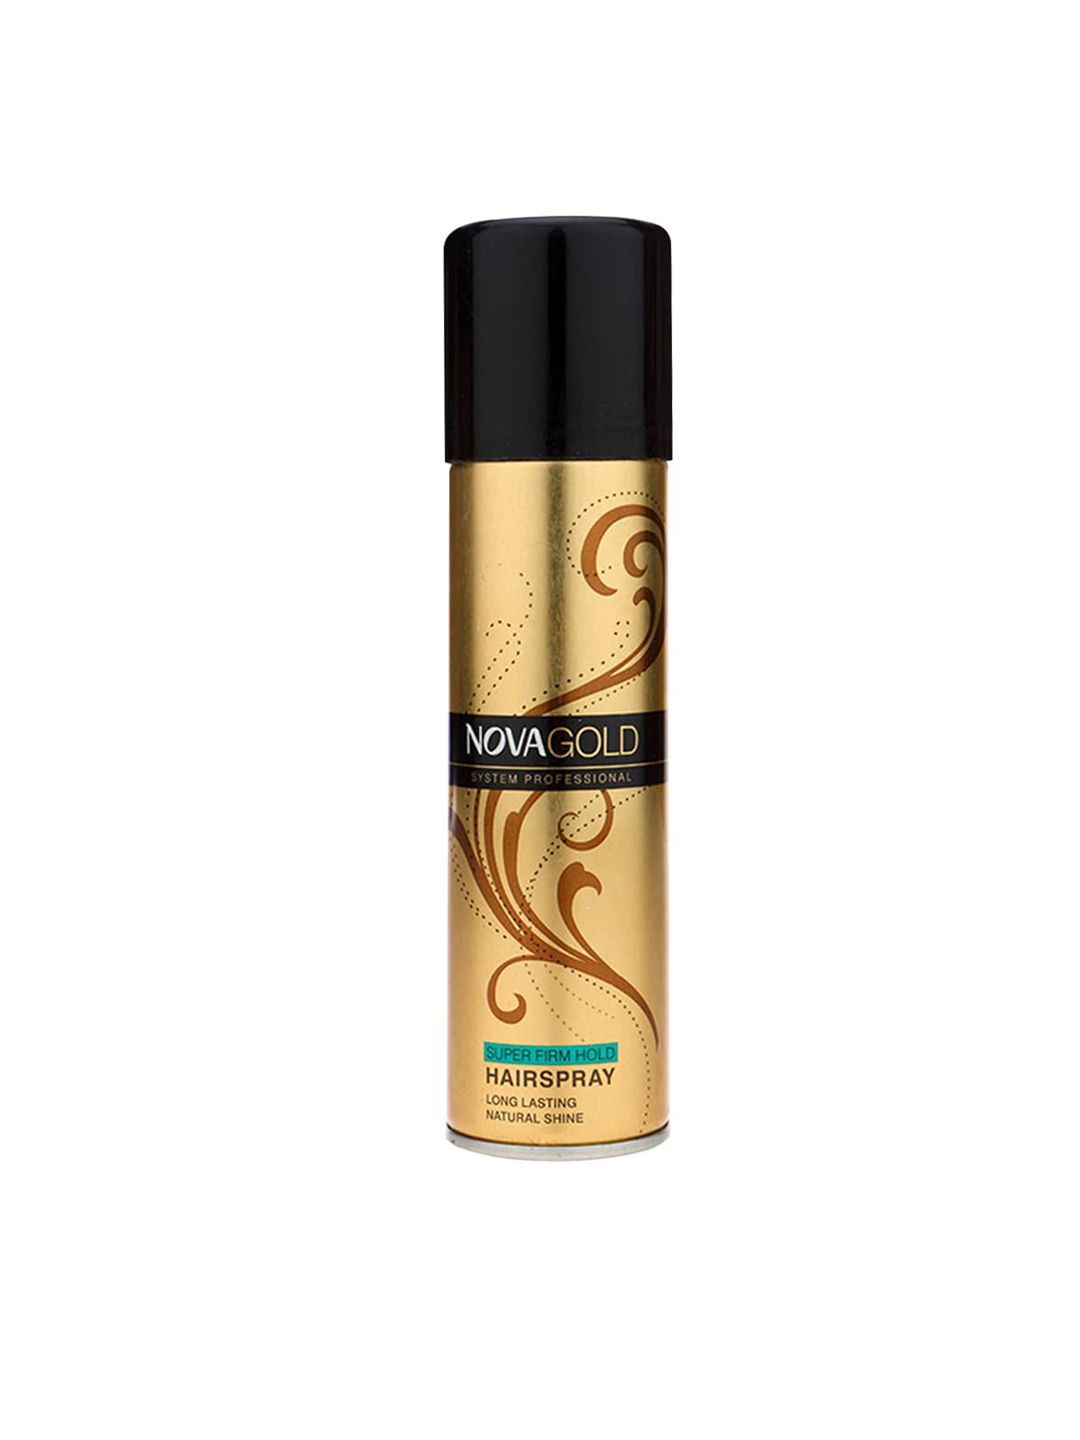 Nova Unisex Gold Super Hold Hair Spray, 200ml Price in India